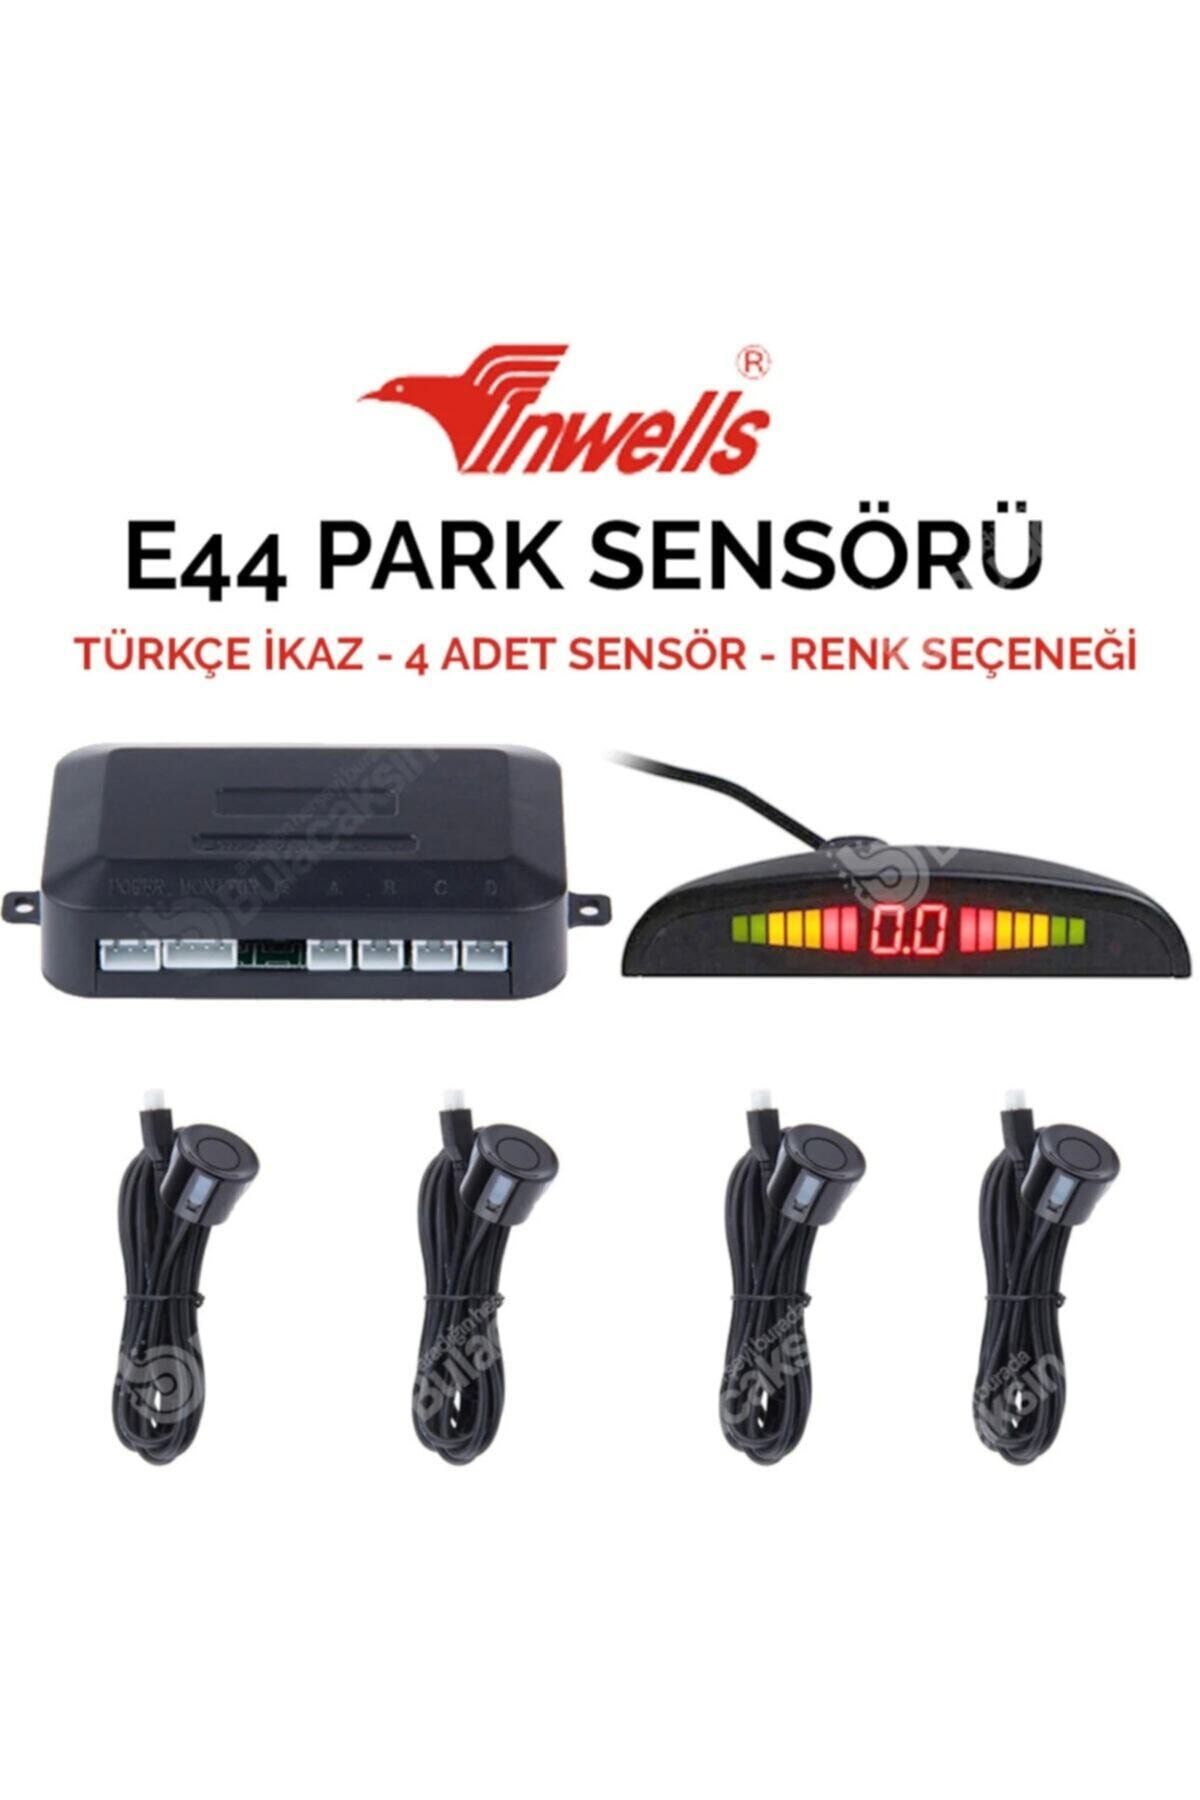 Inwells Park Sensoru E44 4 Sensorlu Beyaz Turkce Konusan